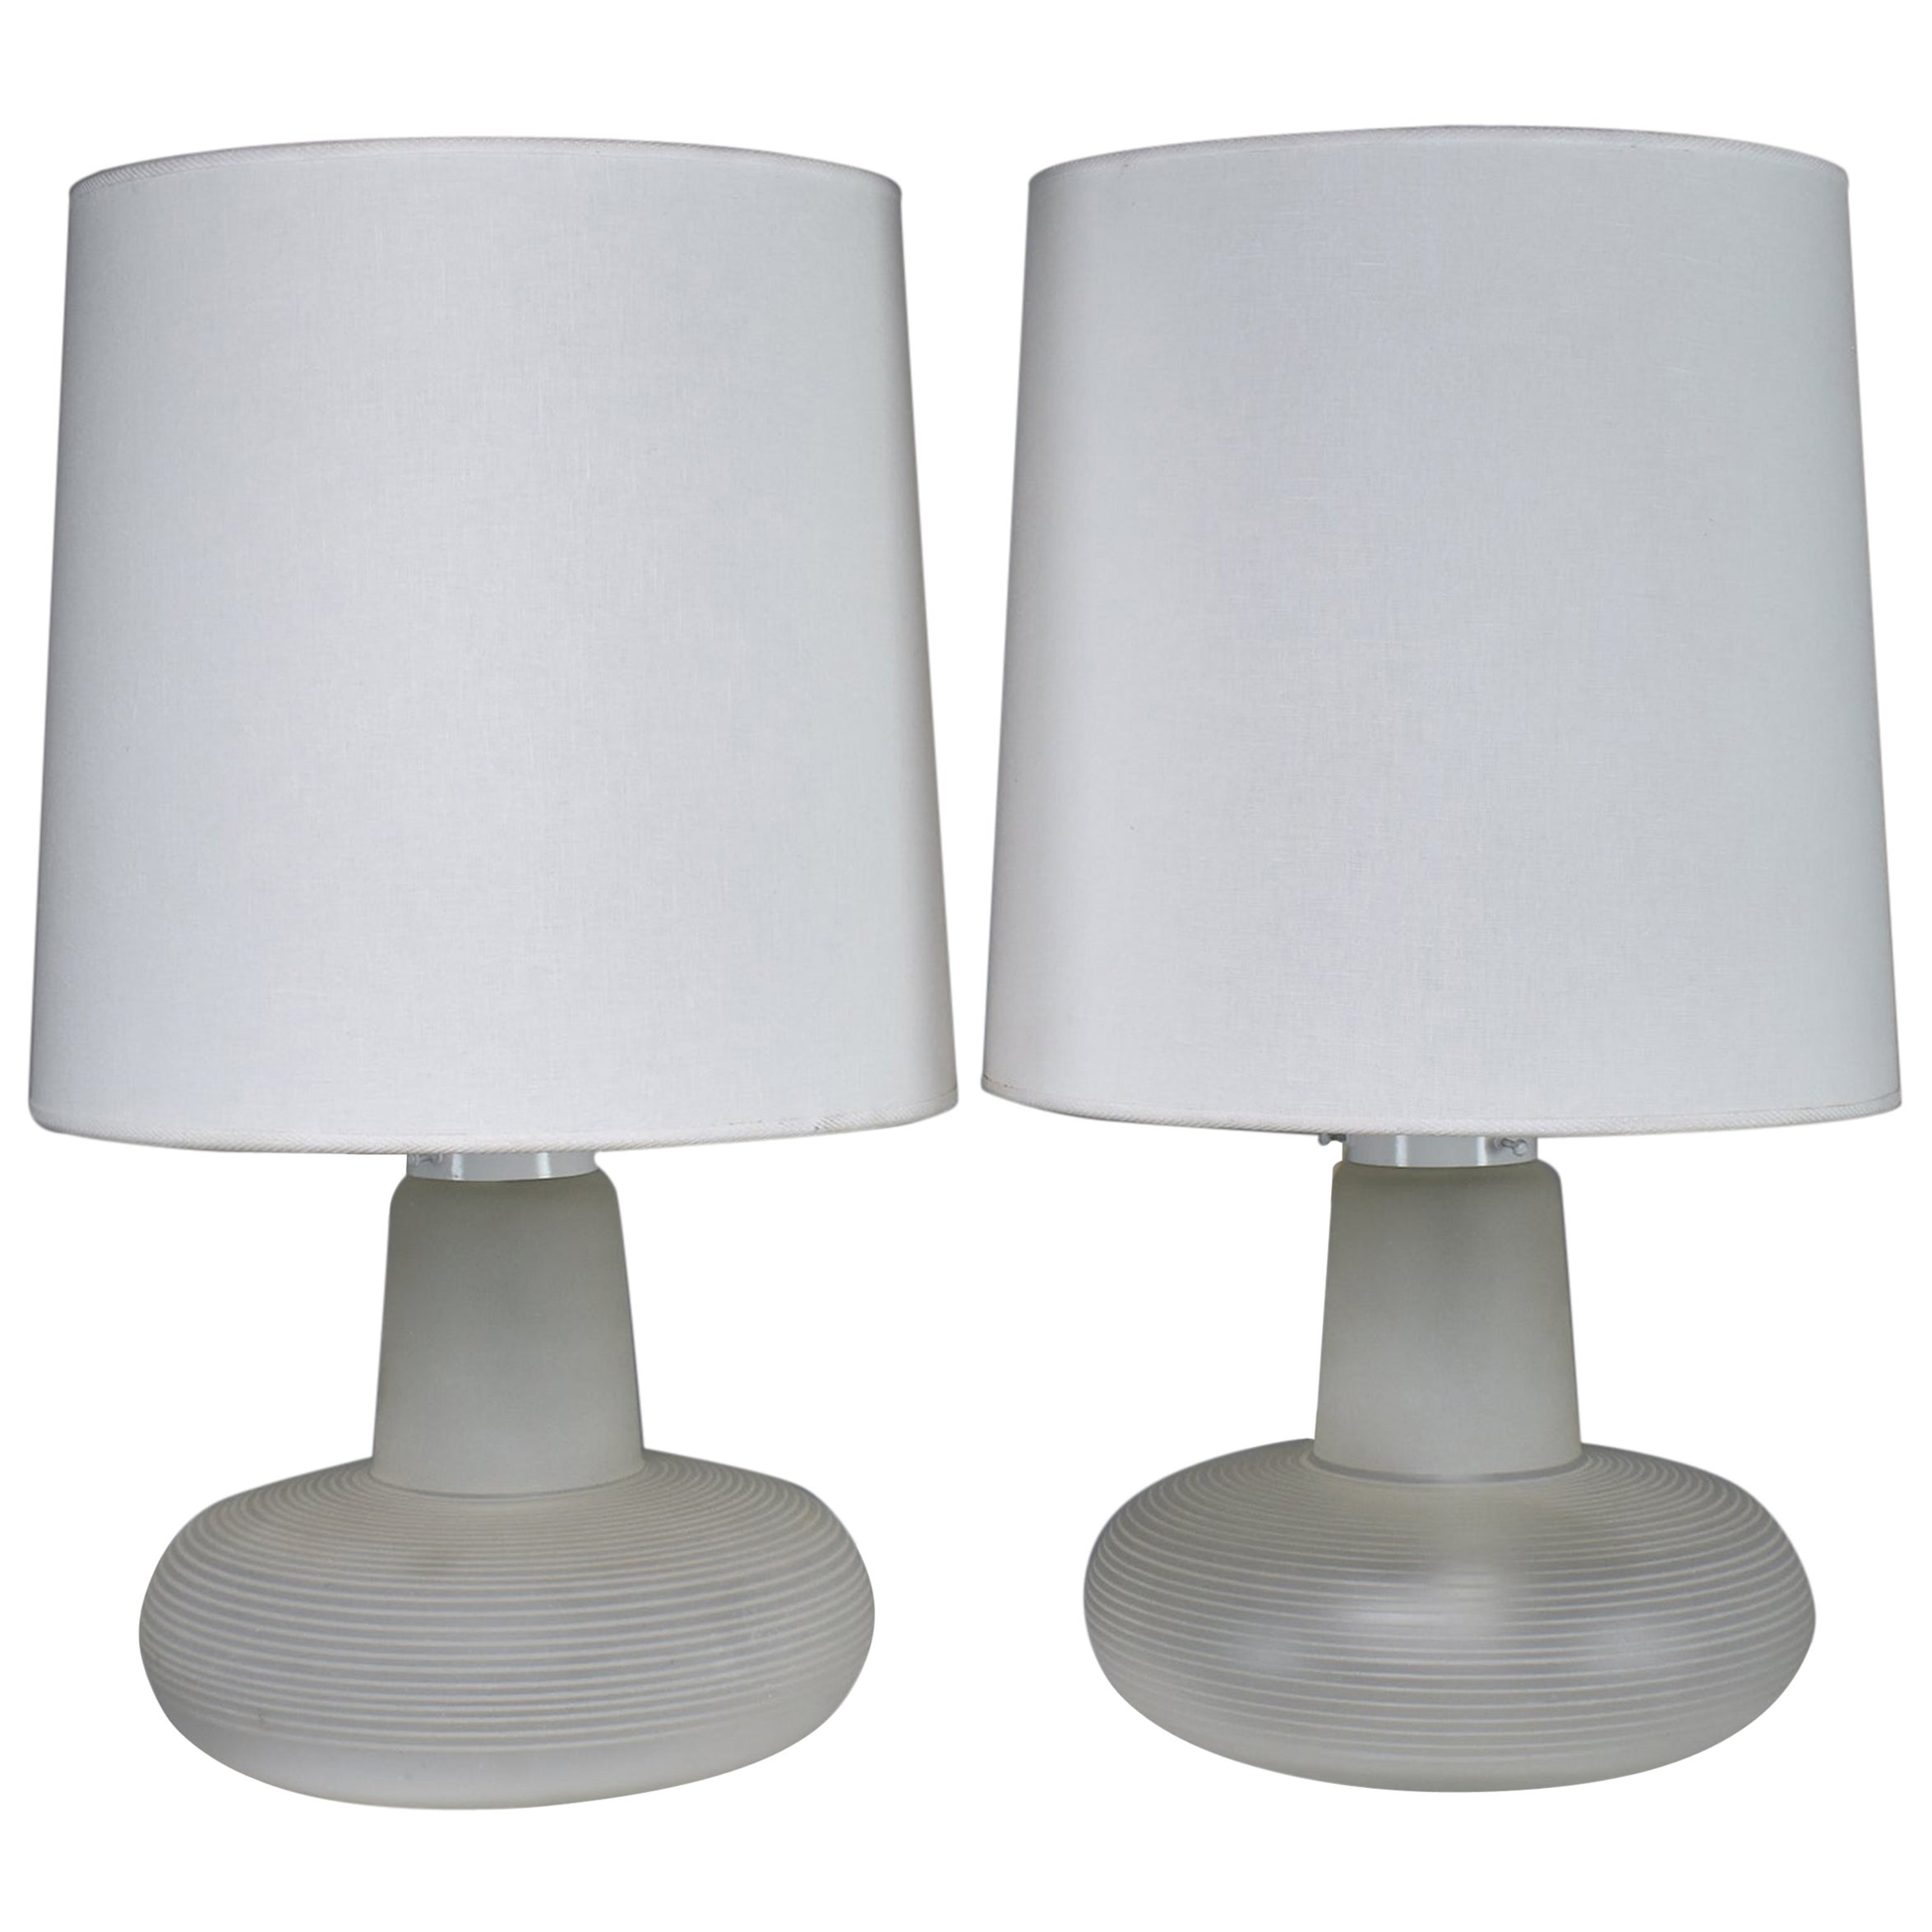 1960-1970 Pair of Italian Murano Table Lamps Attributed to Carlos Nason